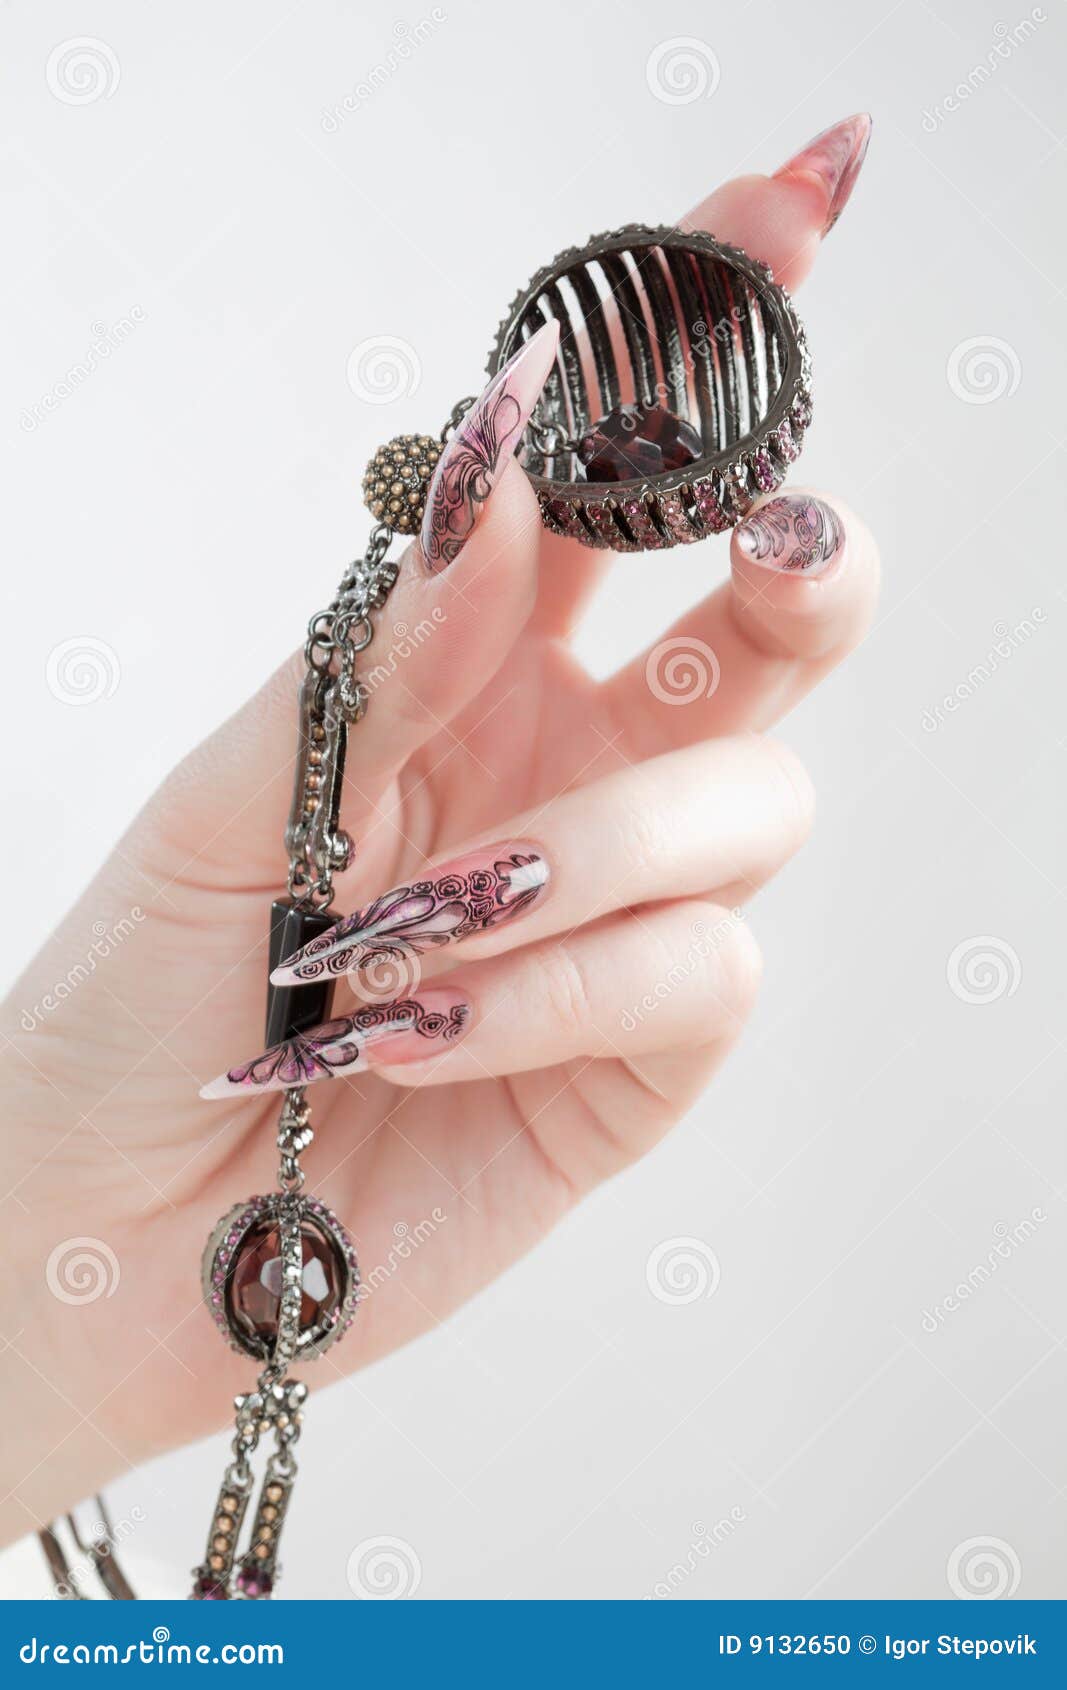 human hand with long fingernail